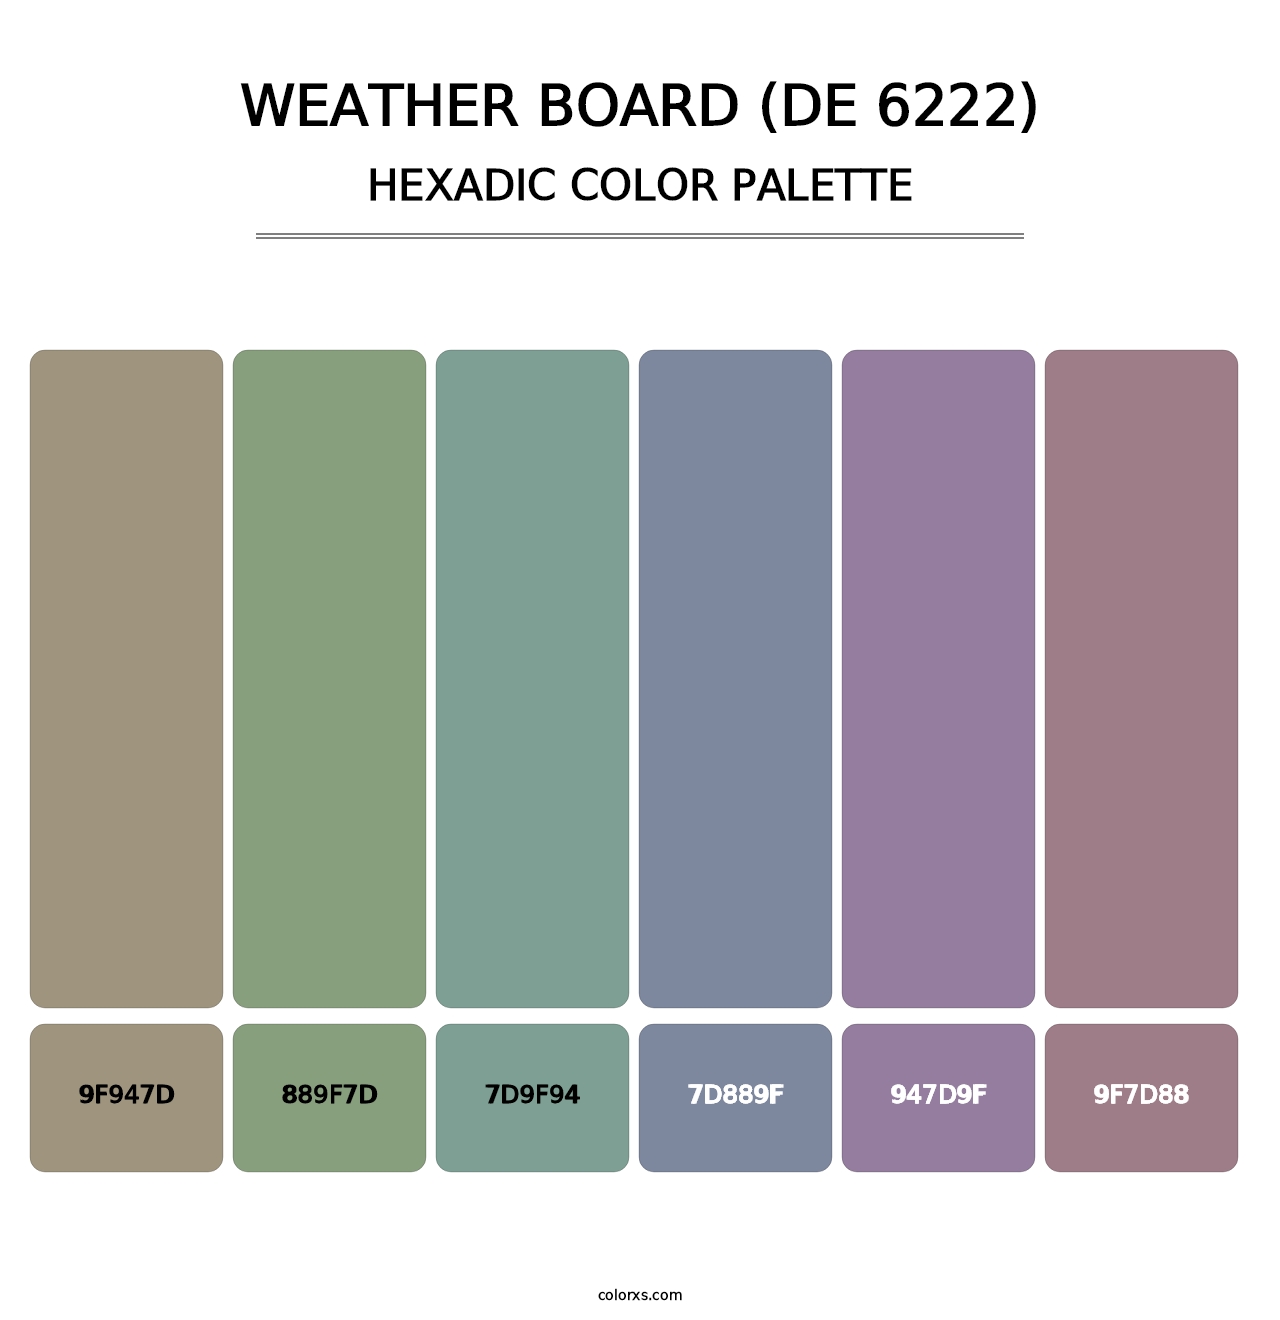 Weather Board (DE 6222) - Hexadic Color Palette